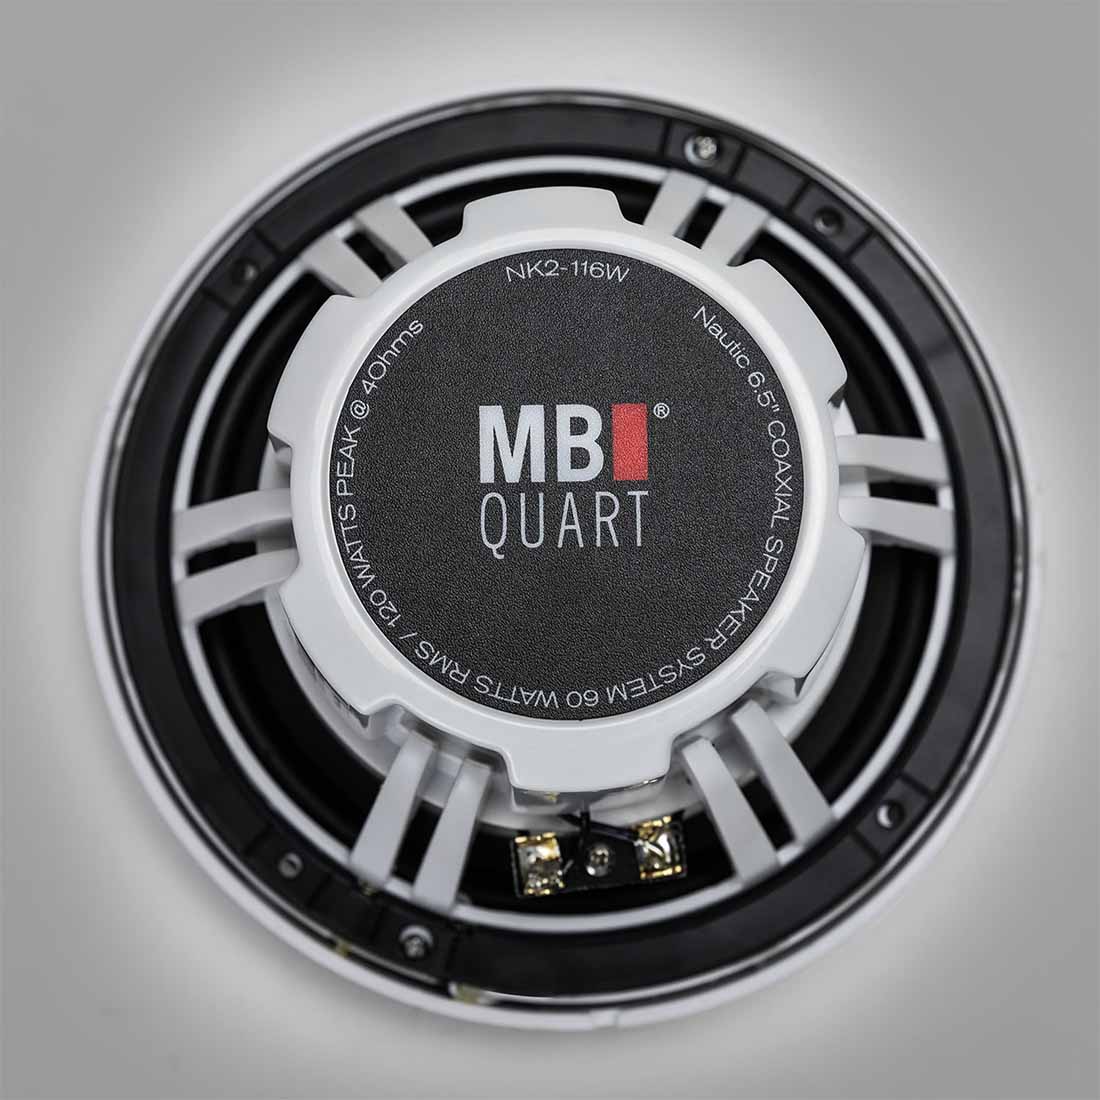 MB Quart NK2-116W 3